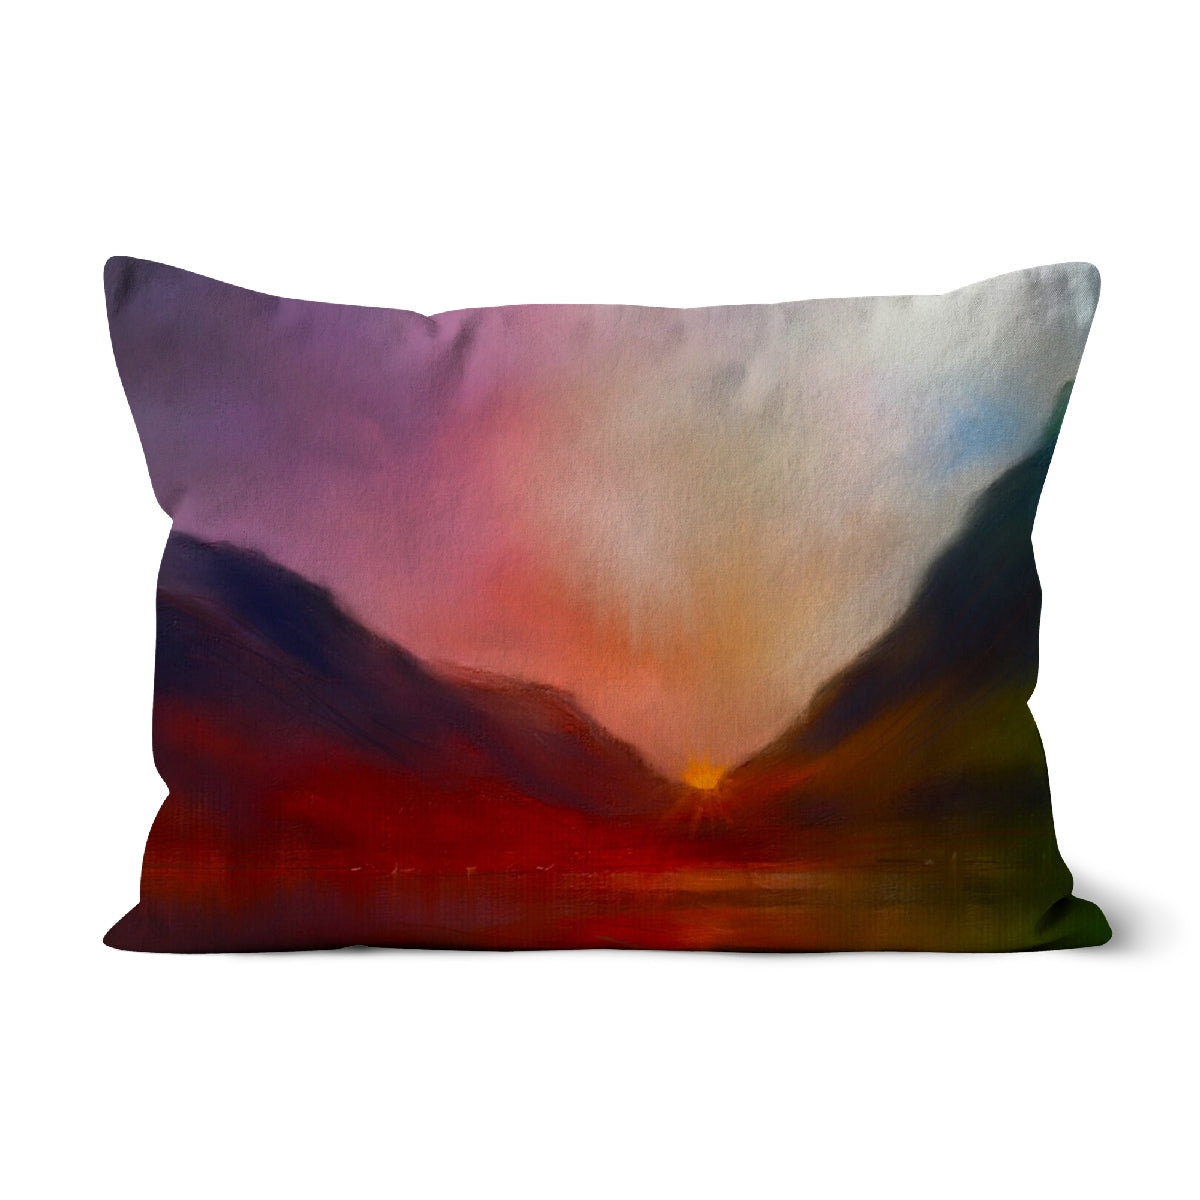 Glencoe Sunset Art Gifts Cushion-Cushions-Glencoe Art Gallery-Canvas-19"x13"-Paintings, Prints, Homeware, Art Gifts From Scotland By Scottish Artist Kevin Hunter